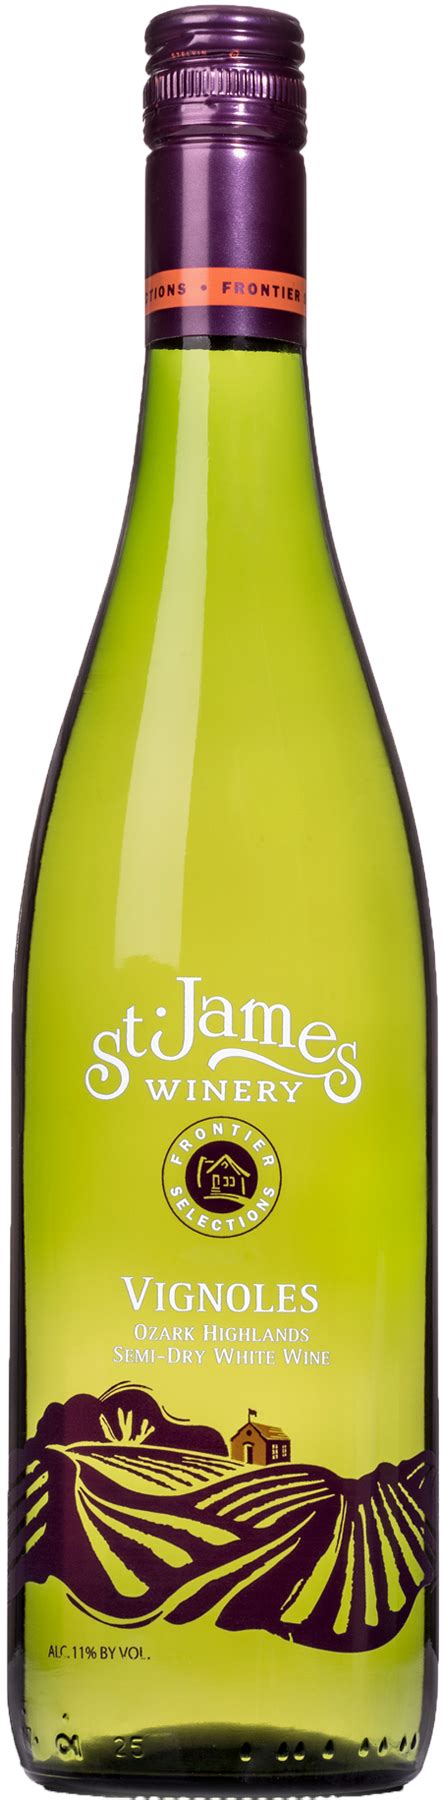 Vignoles St James Winery